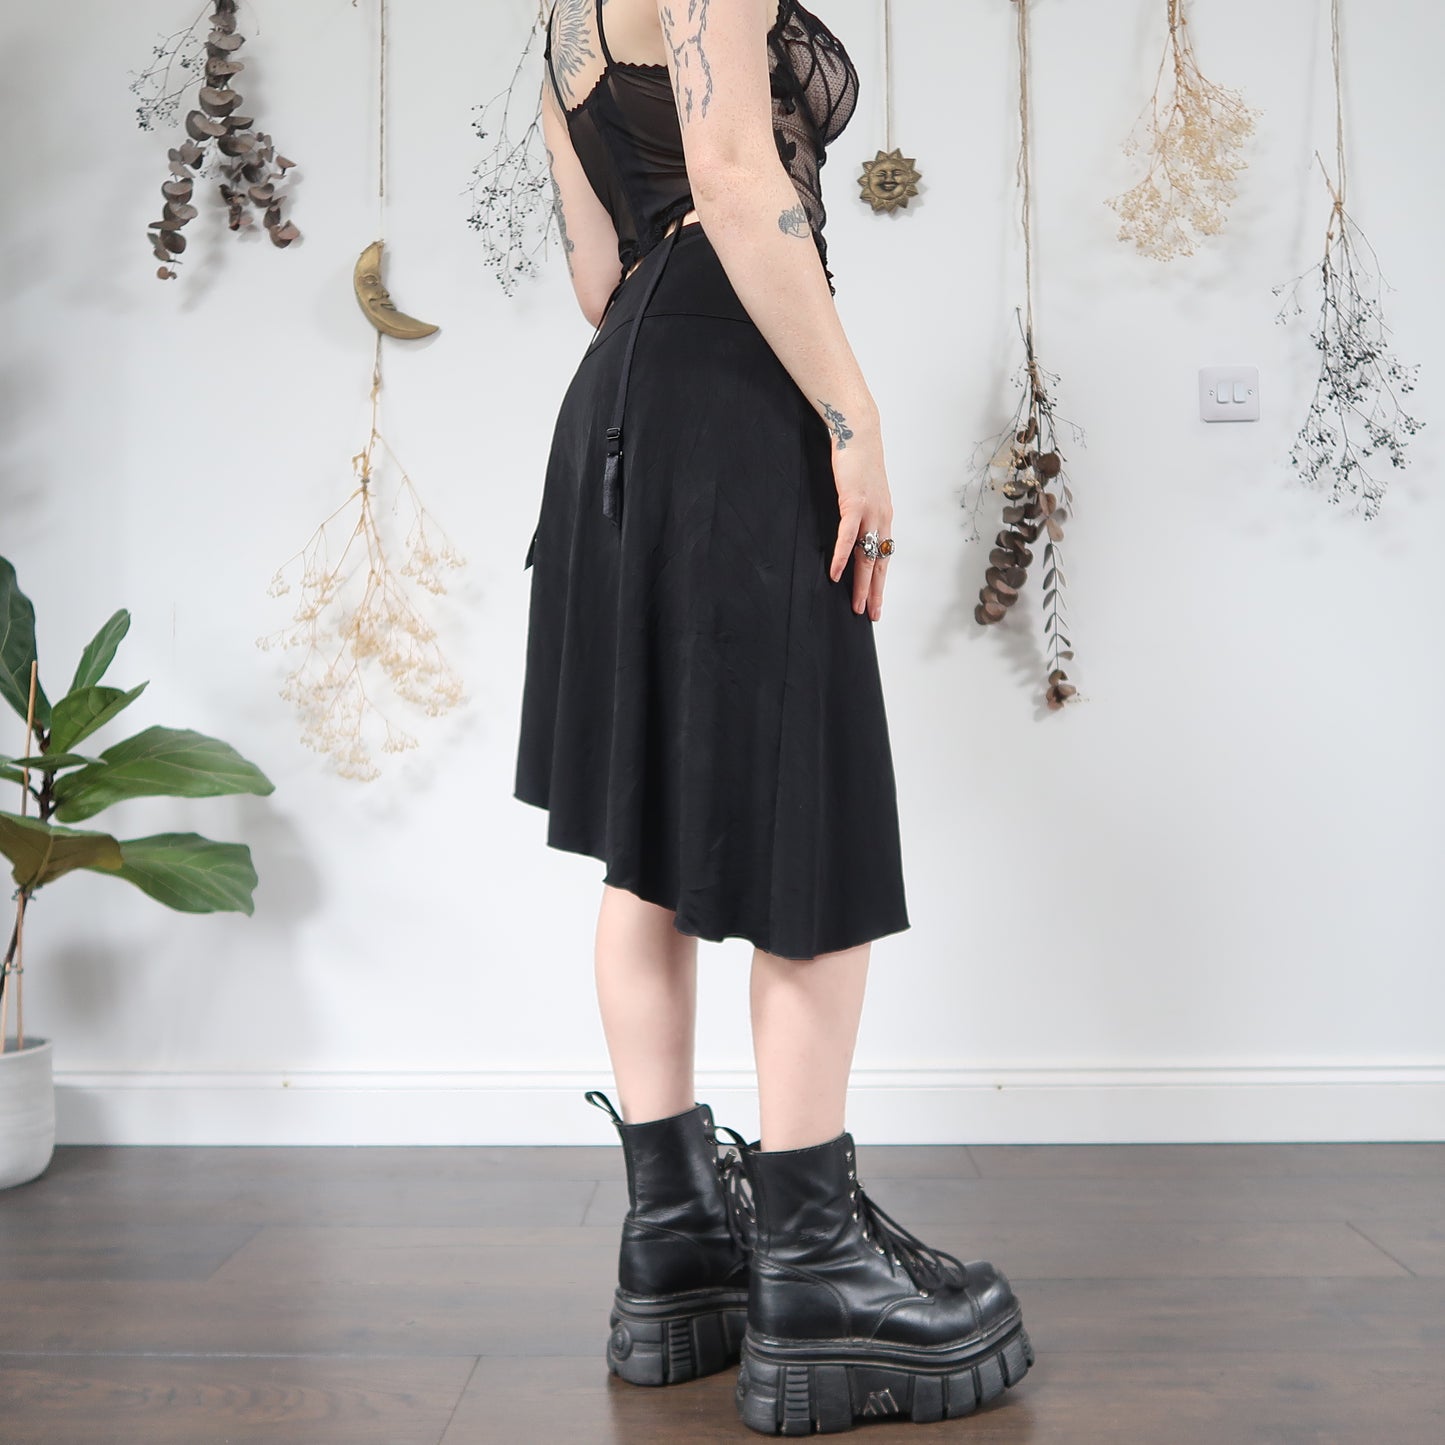 Black ruched skirt - size M/L